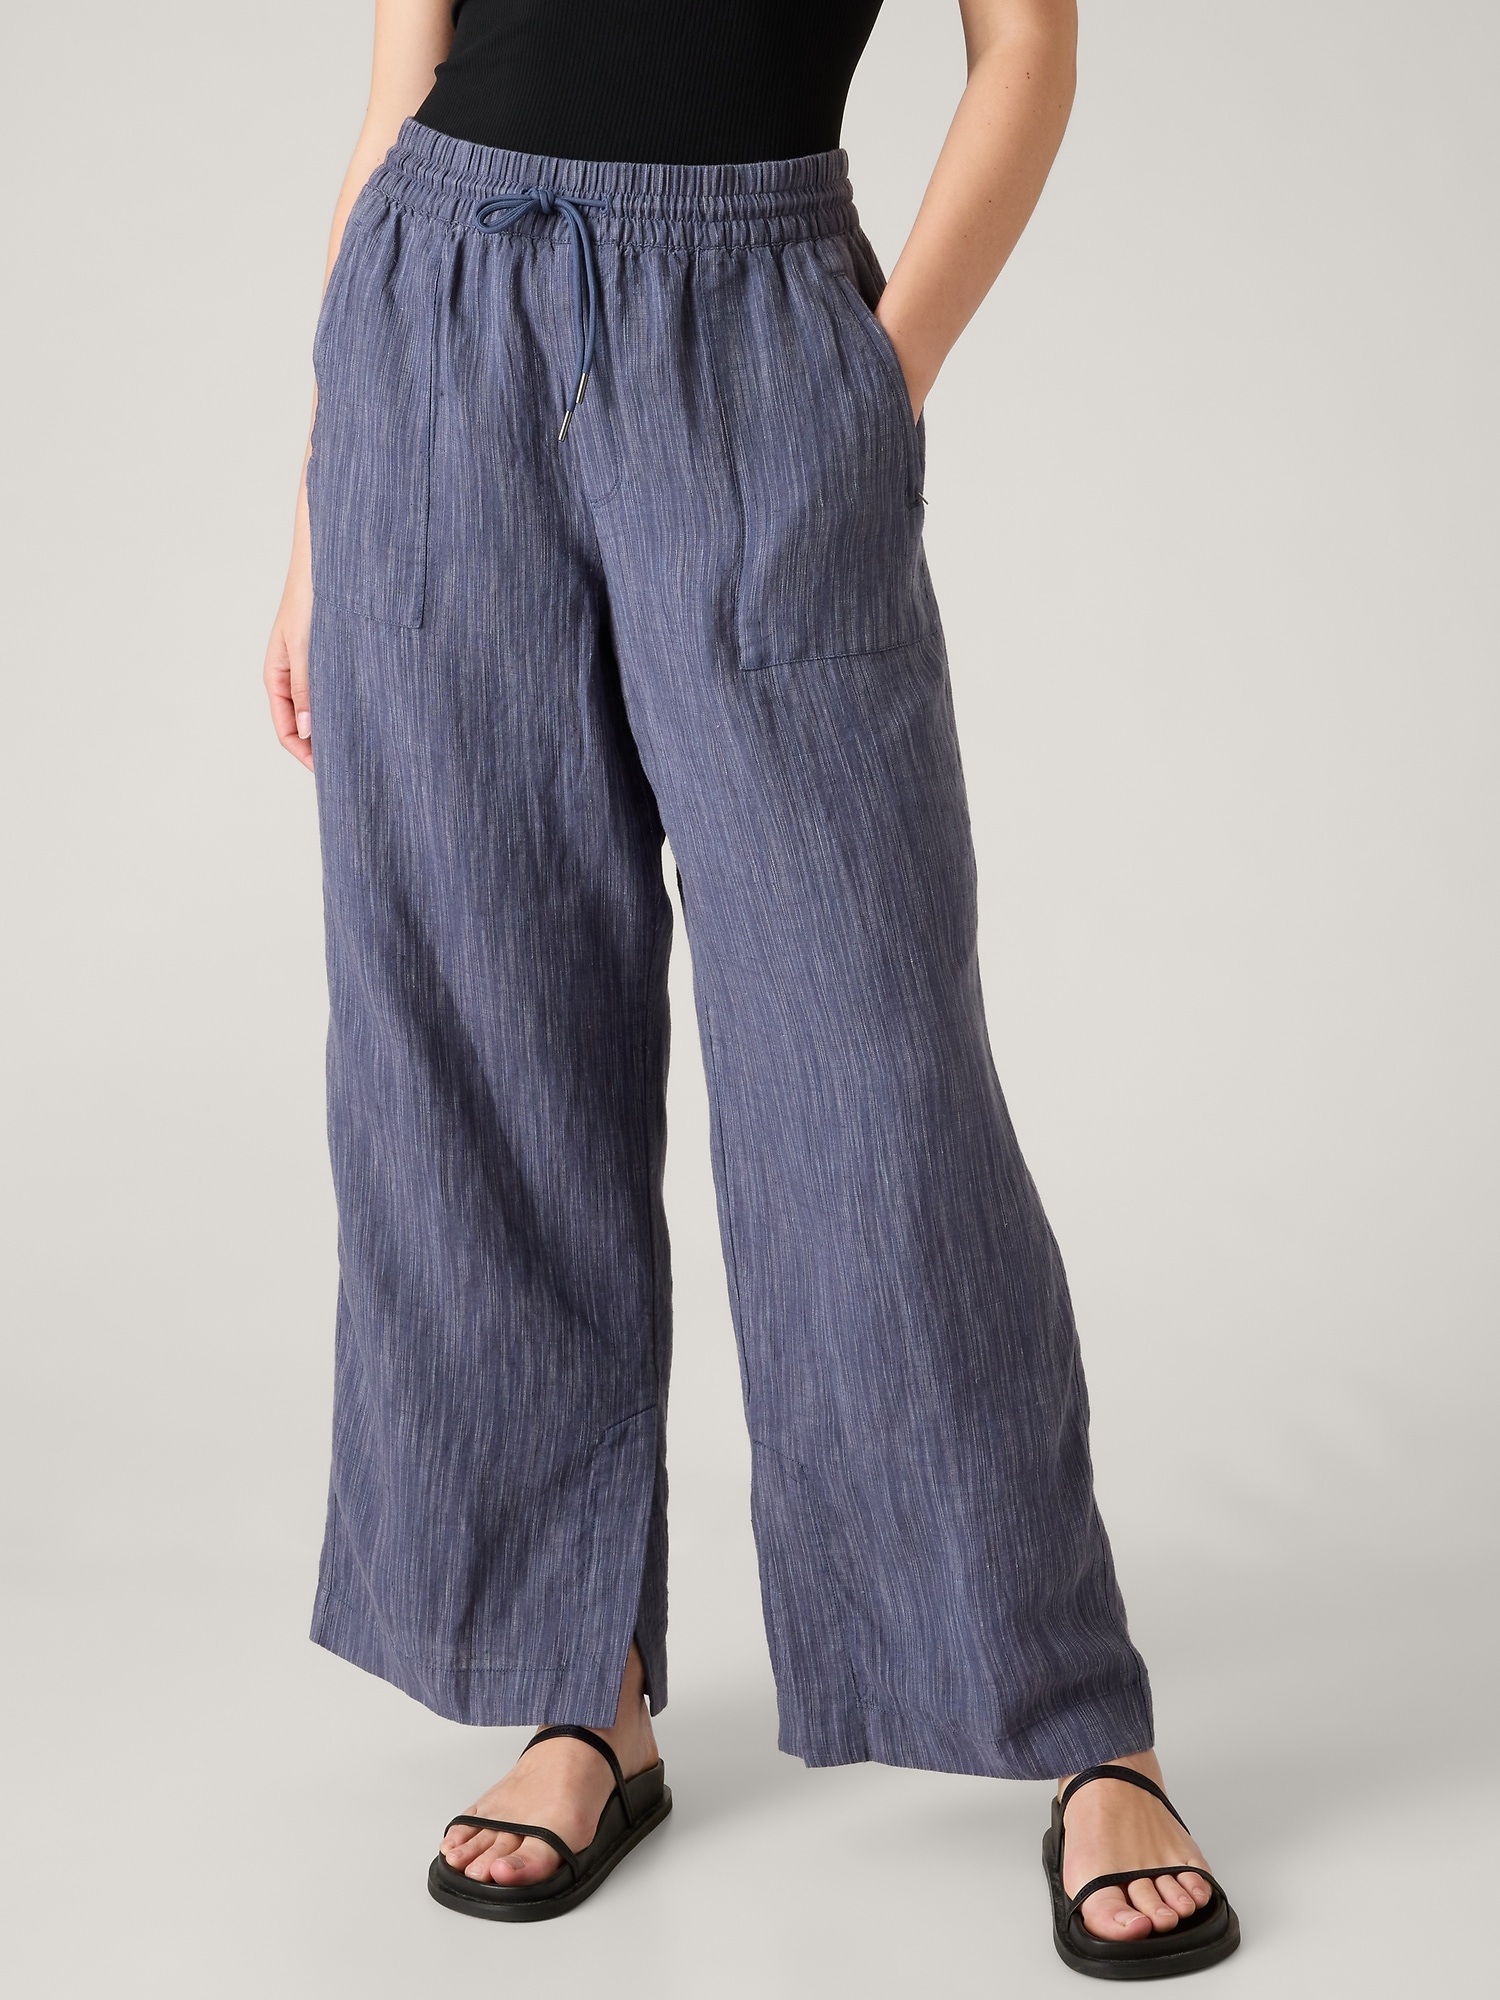  Linen Pants Women Summer Petite, Wide Leg Loose fit